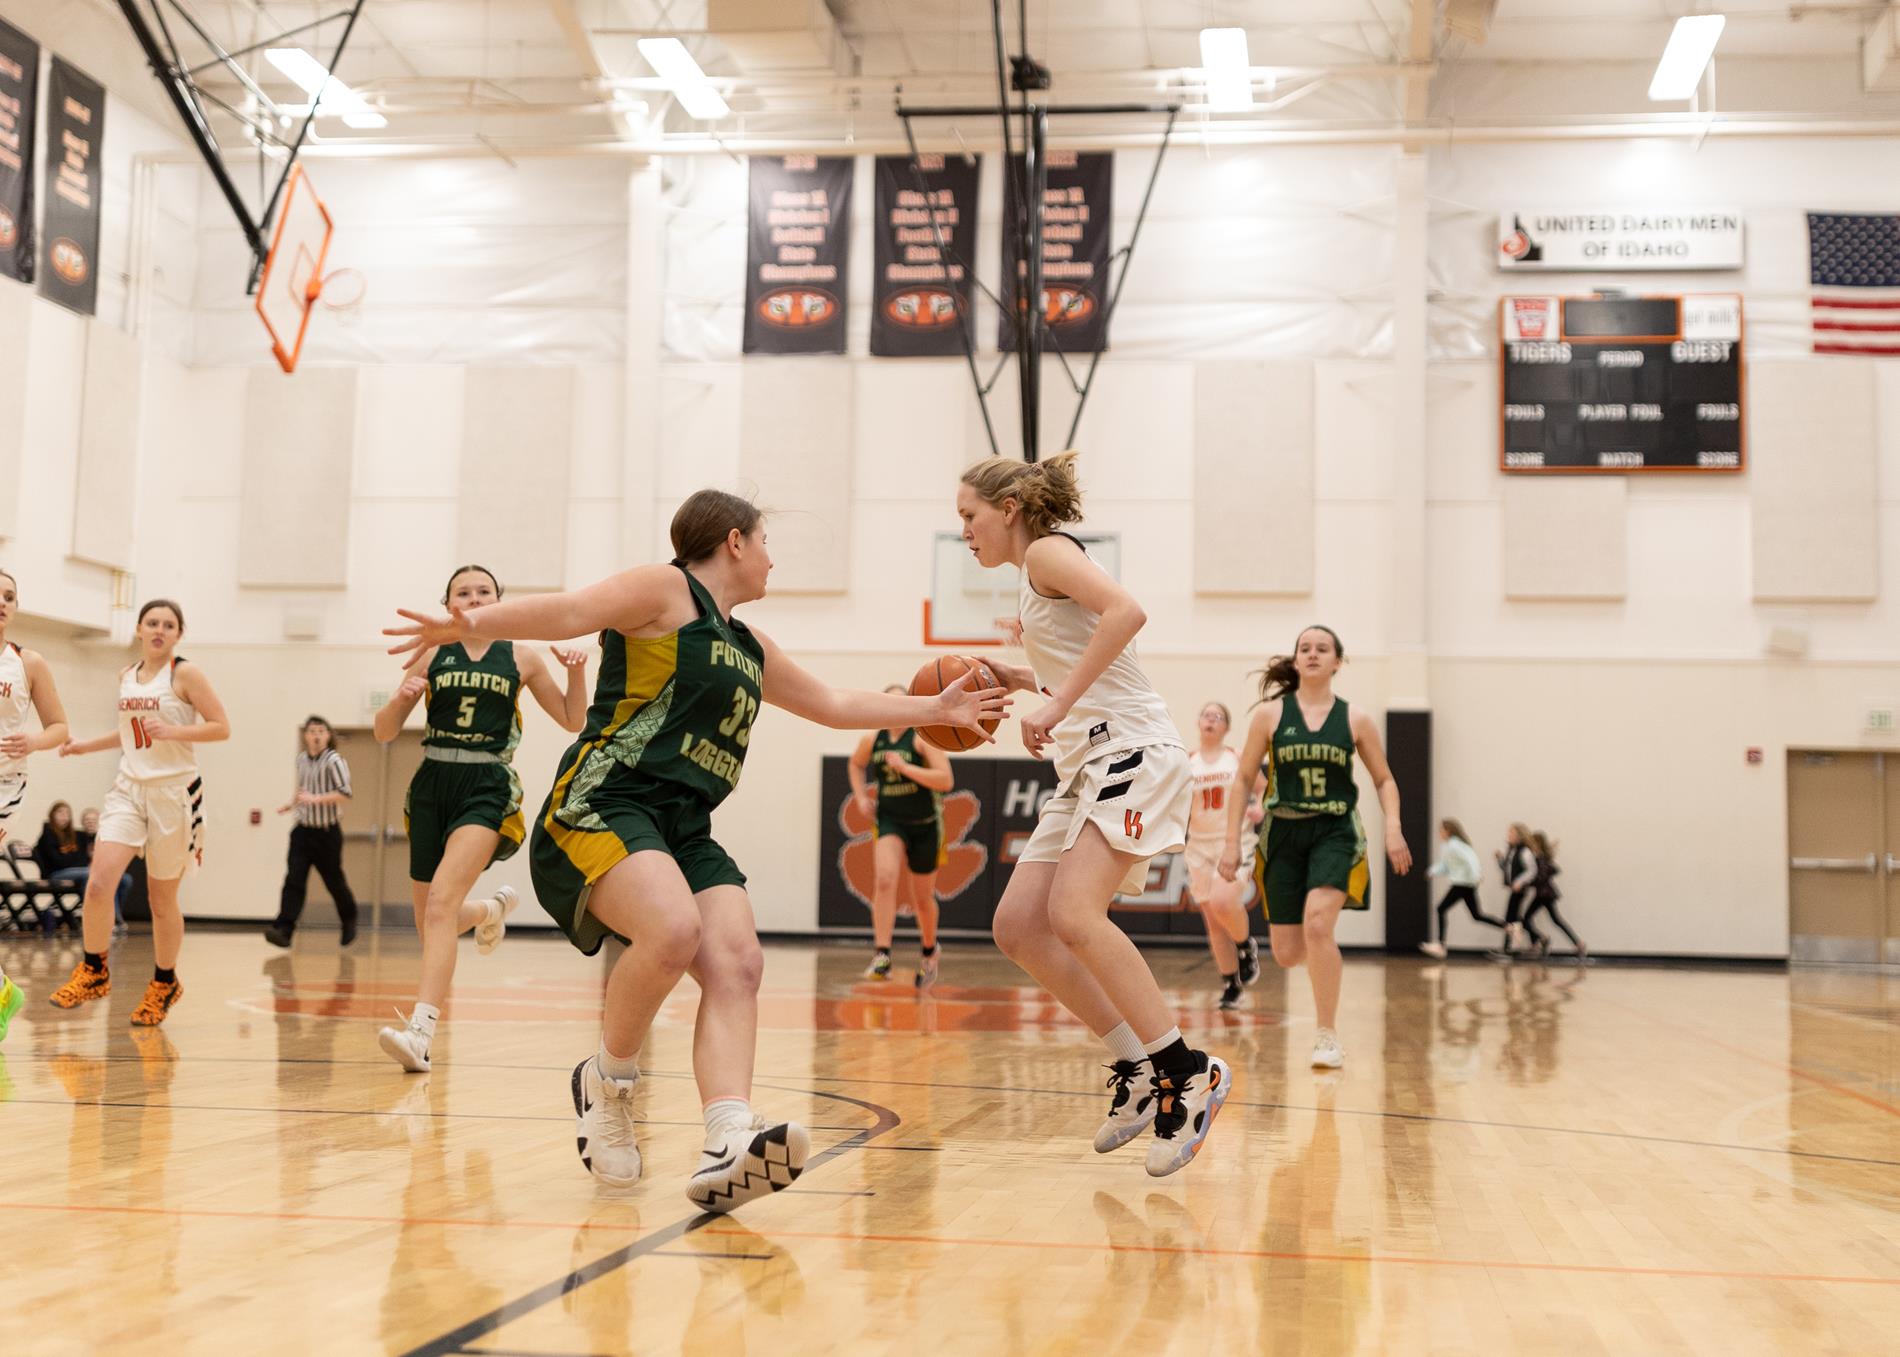 Girls basketball player dribbling on court